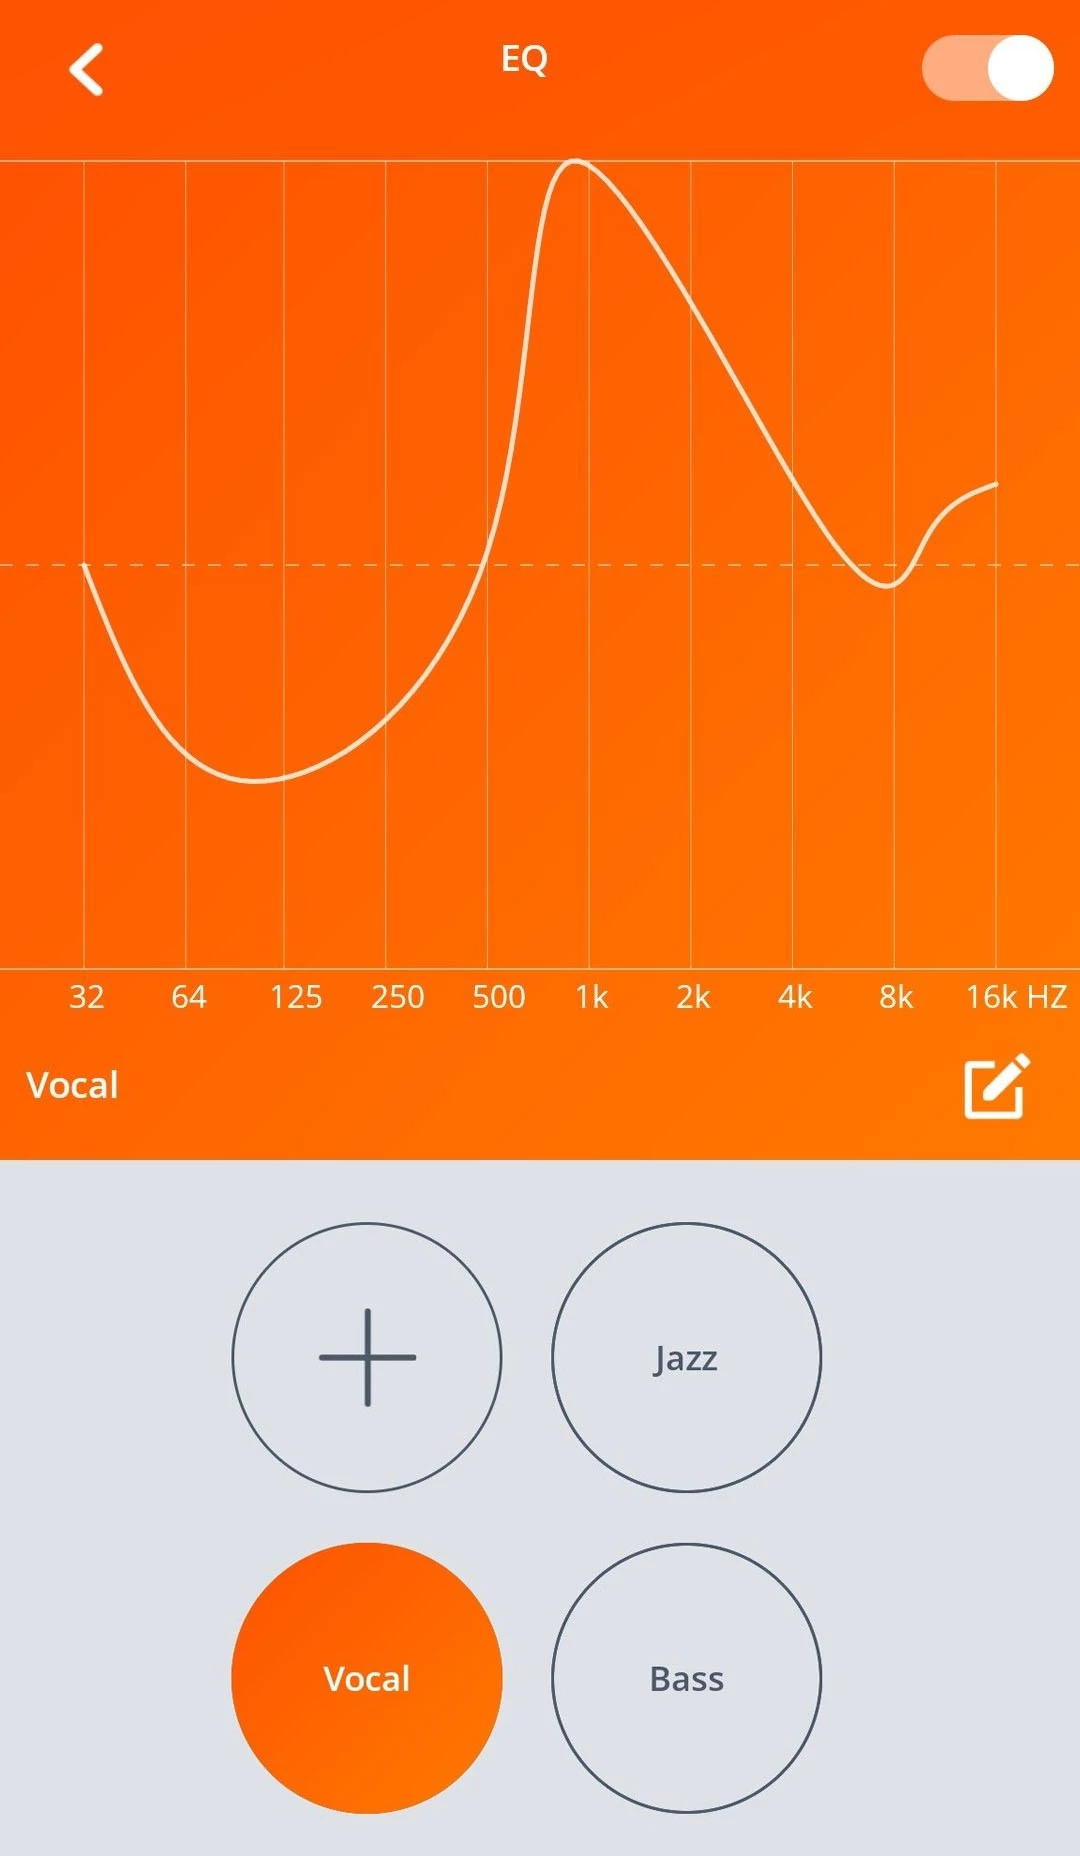 How to adjust volume on JBL earbuds?